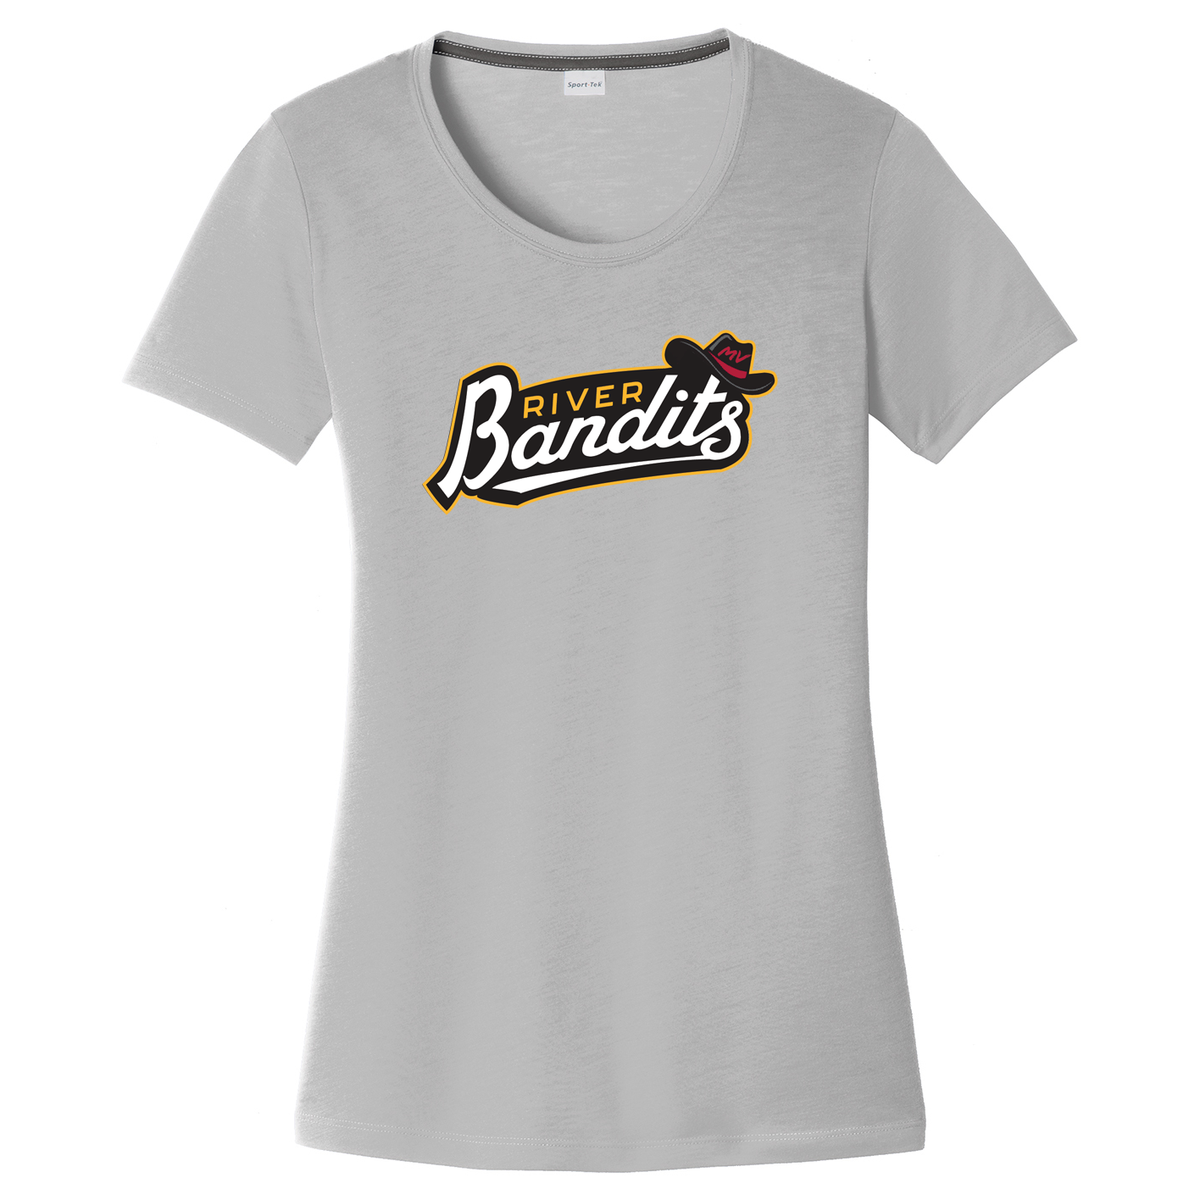 River Bandits Baseball Women's CottonTouch Performance T-Shirt